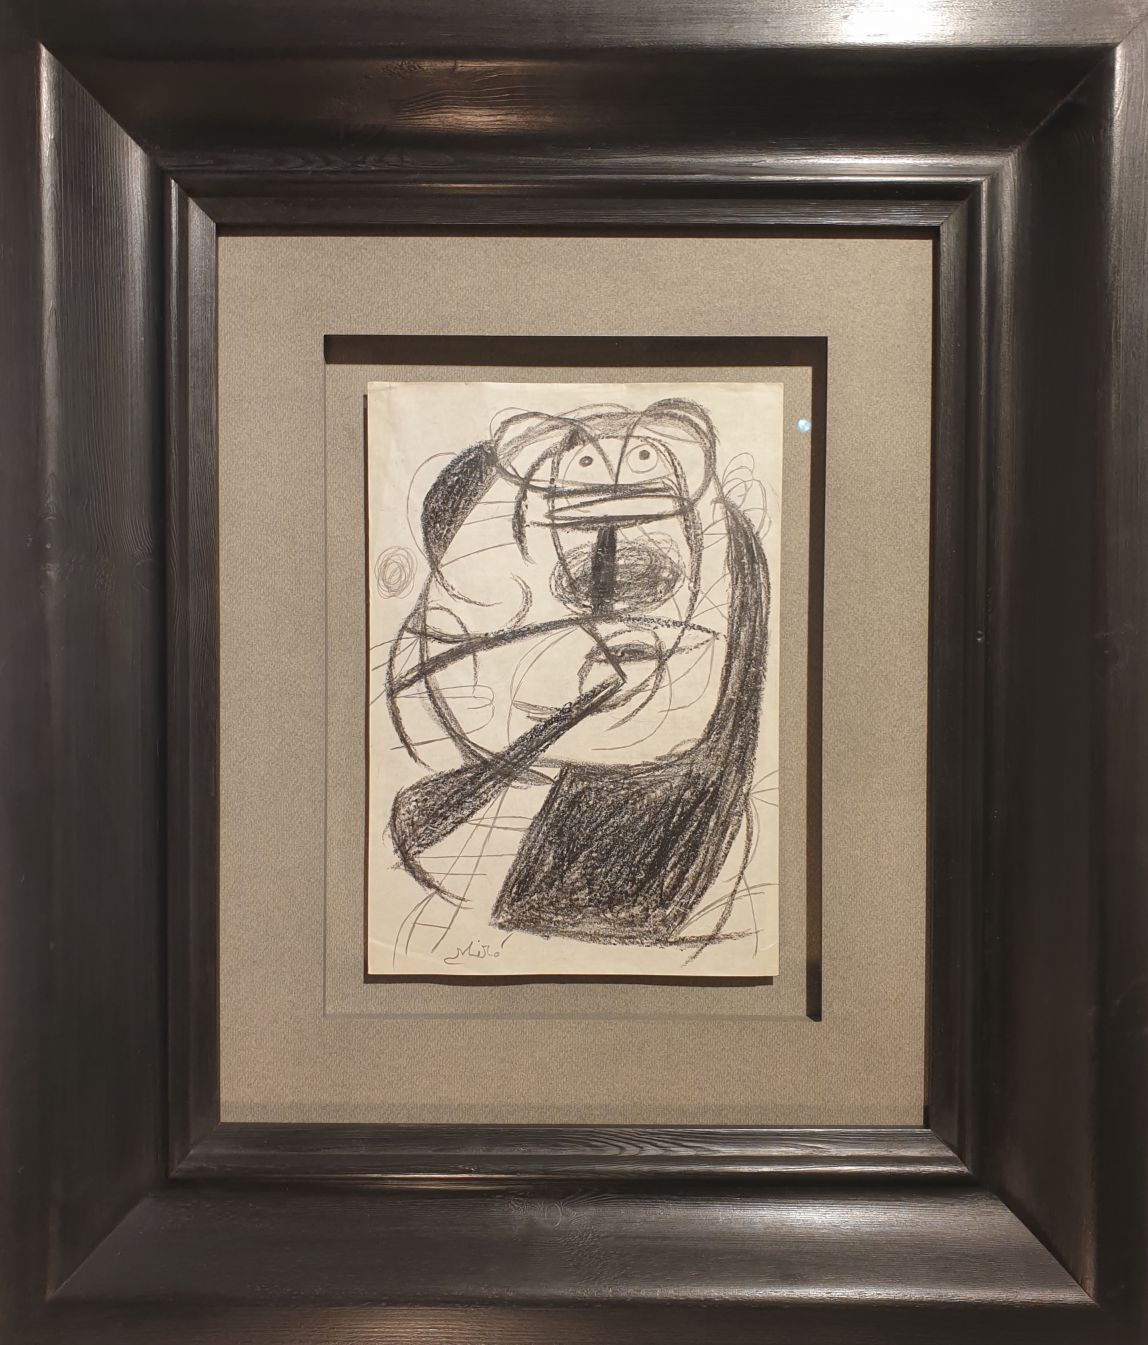 FEMME WOMAN (1981) - Joan Miró